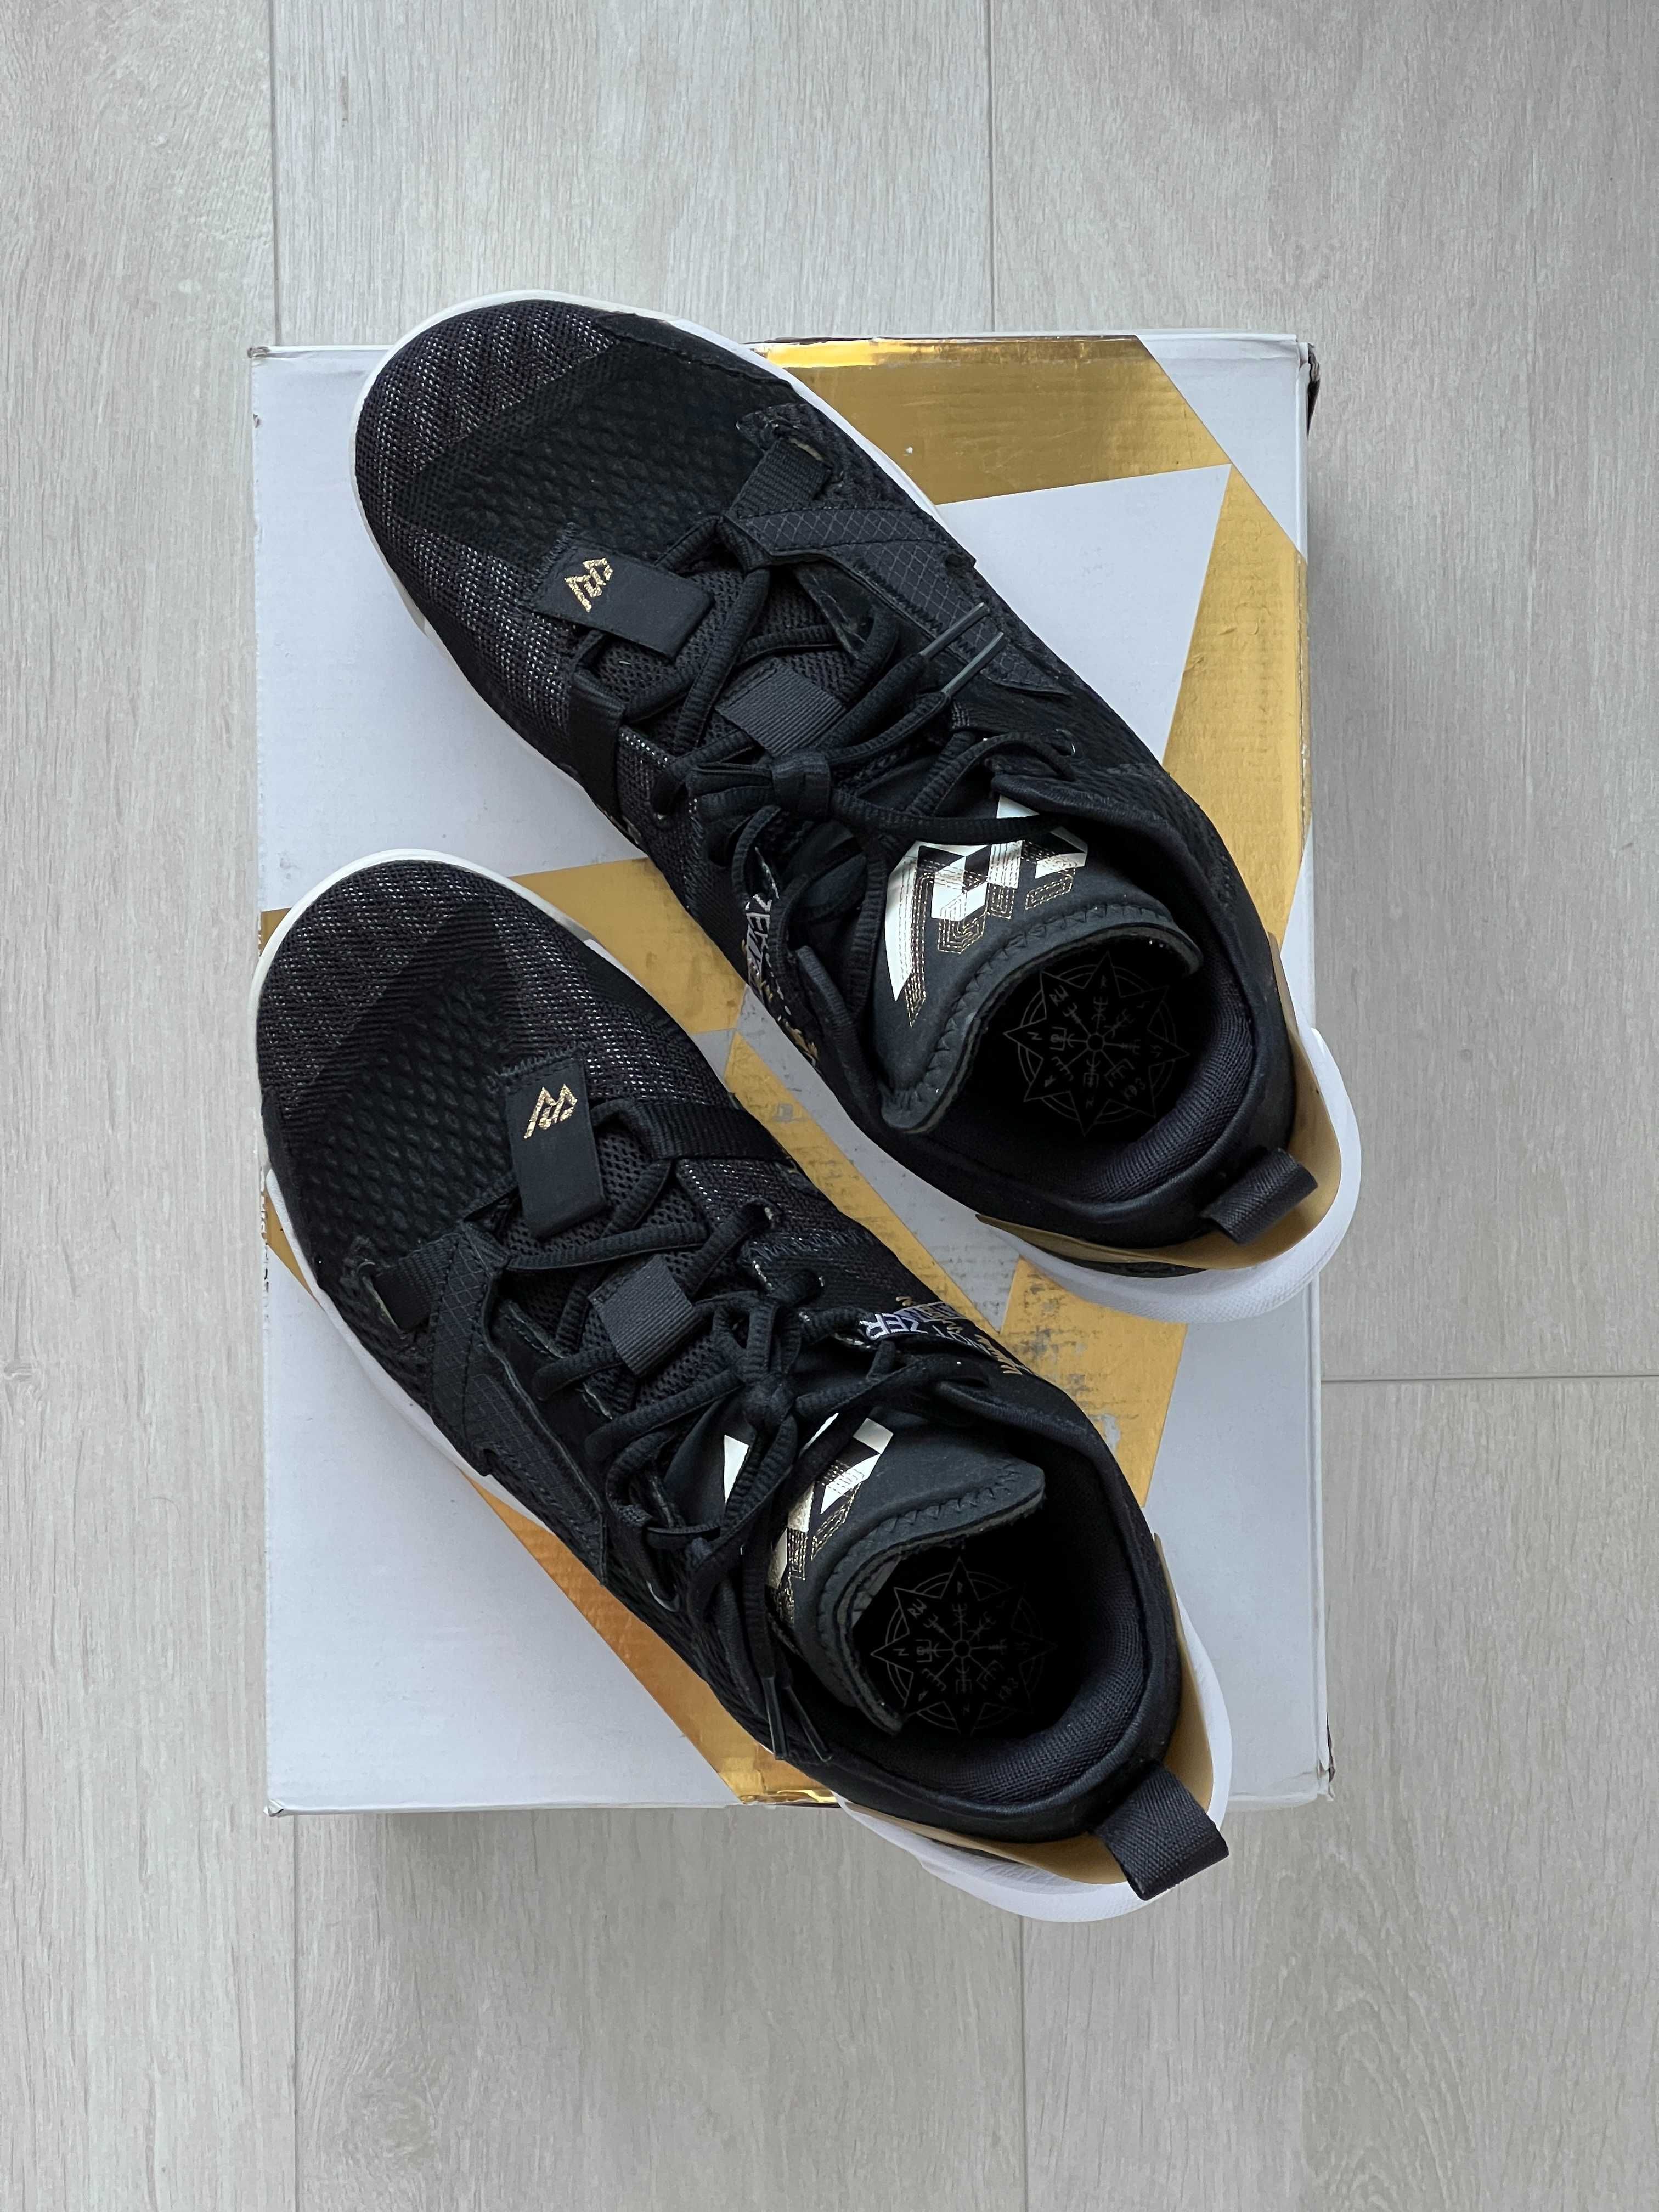 Basketball Shoes Jordan Why Not Zero 4.0